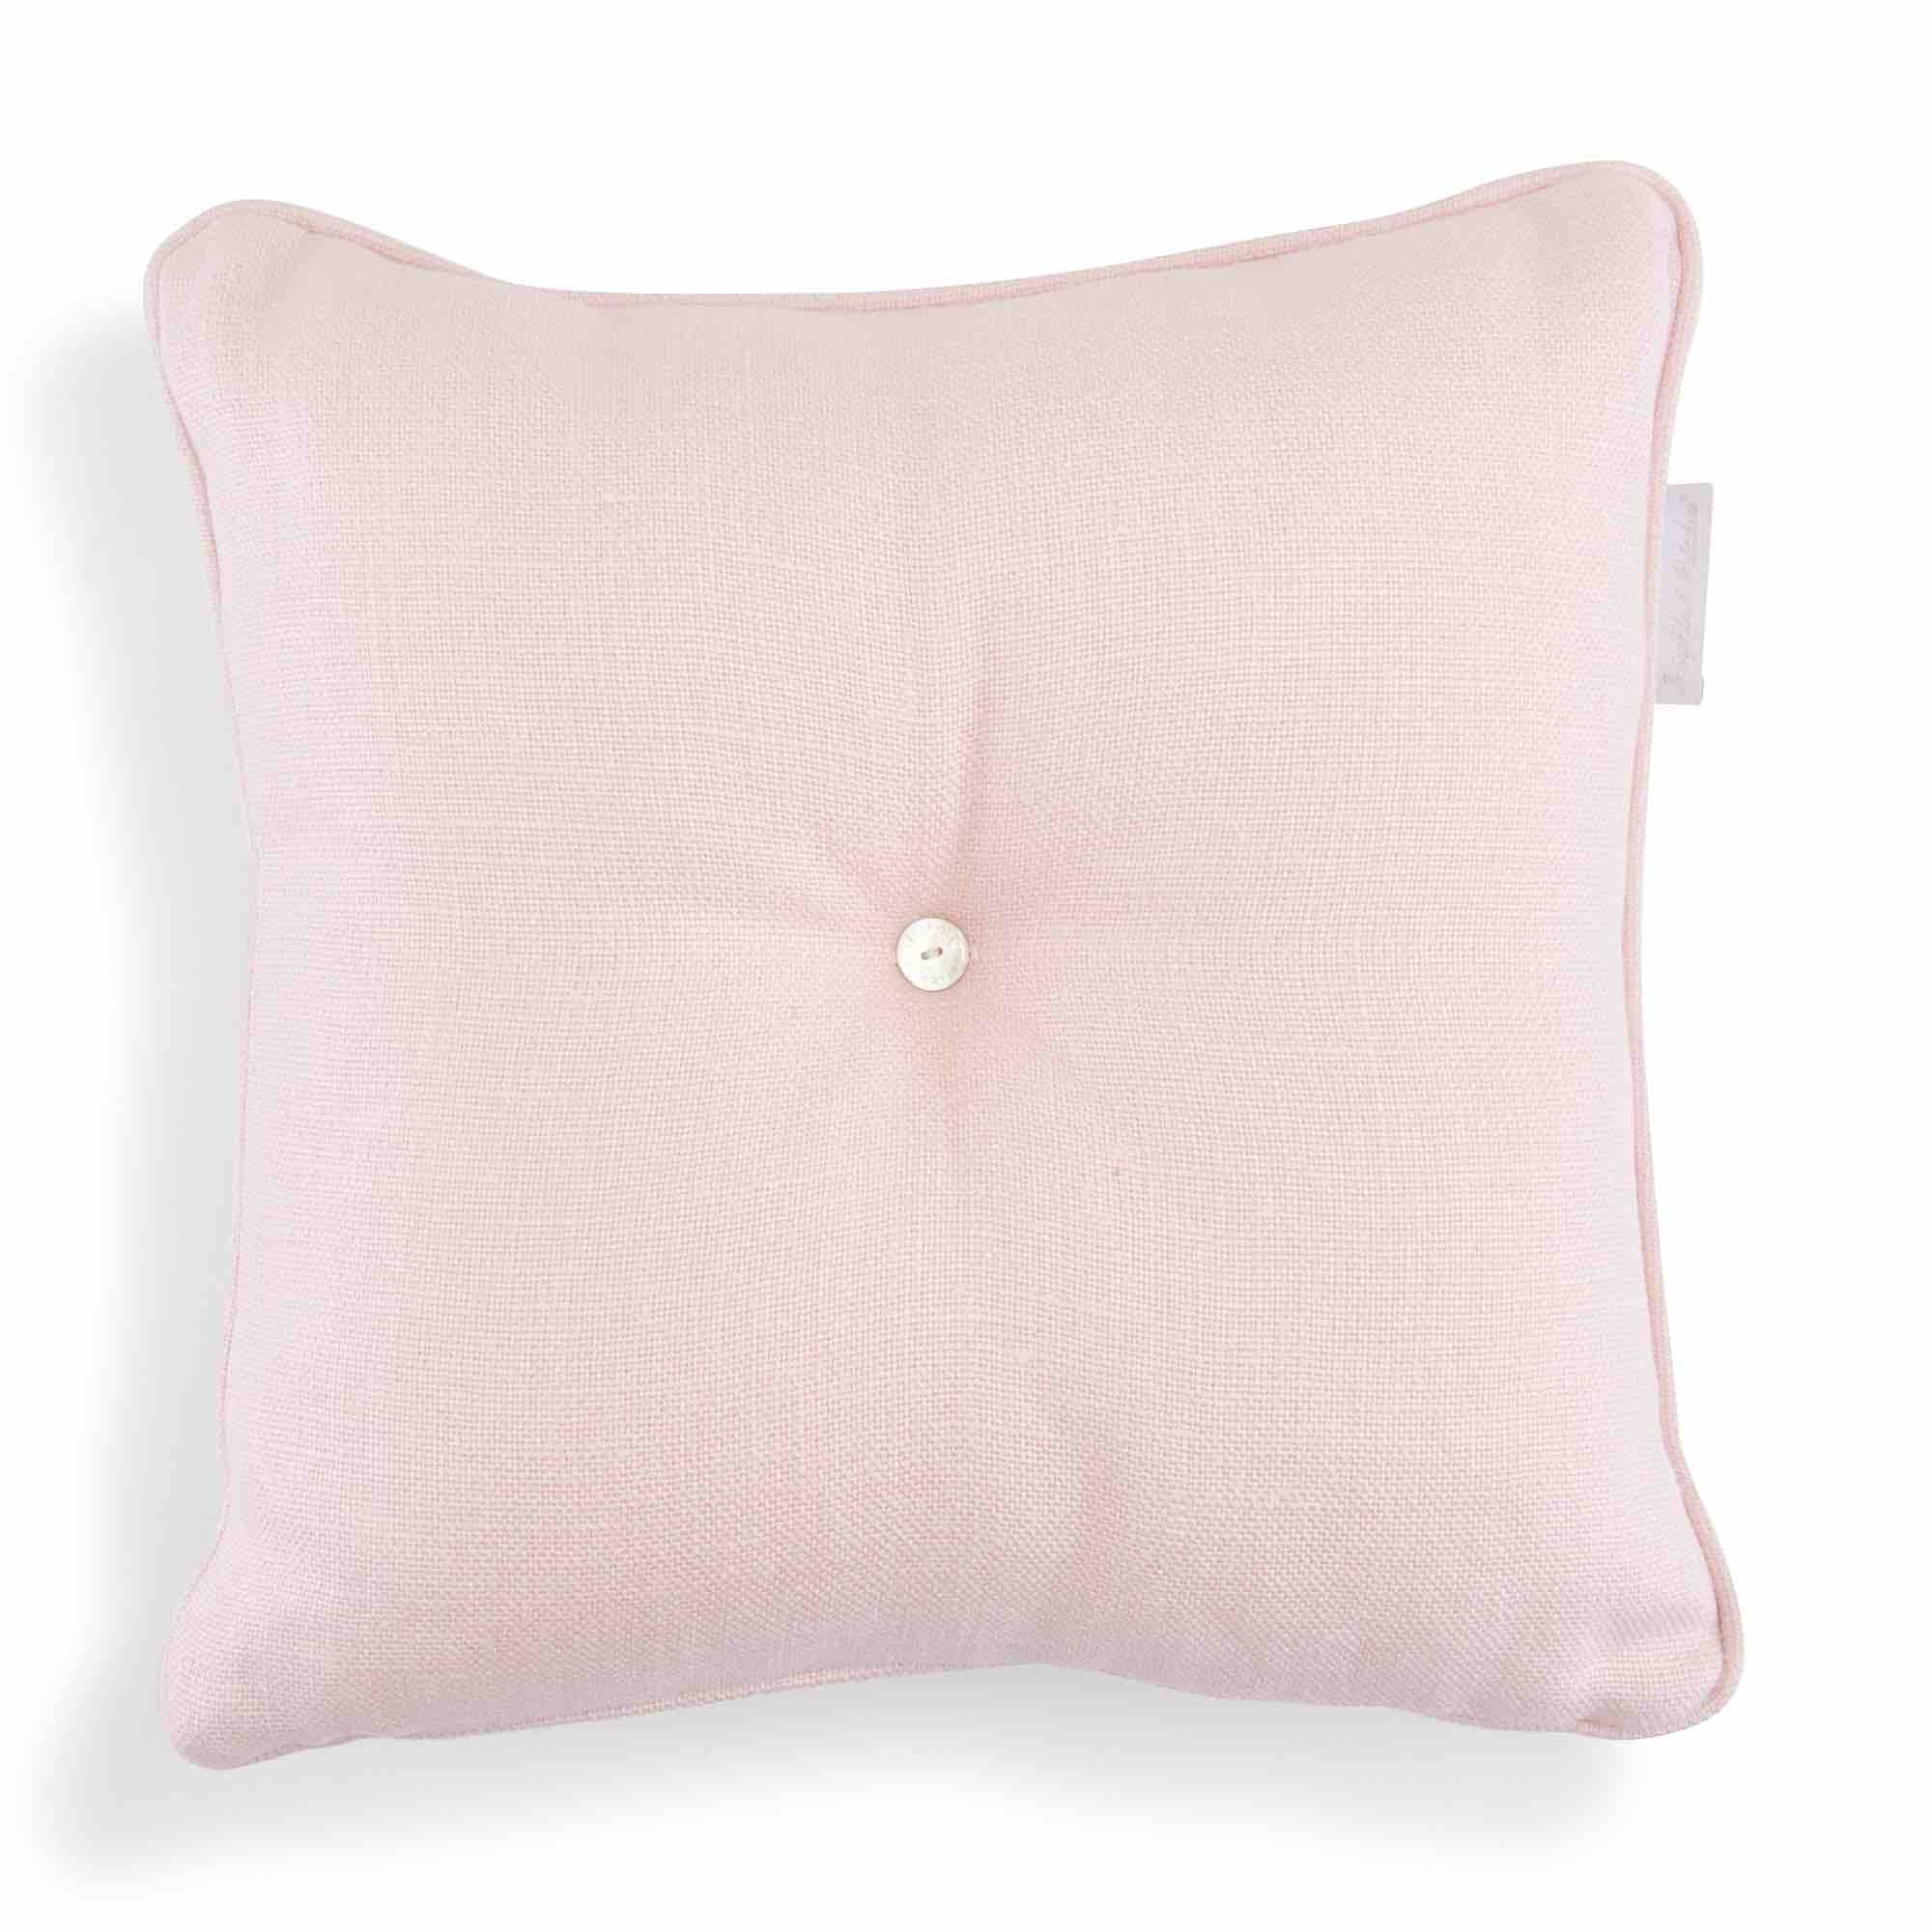 Theophile & Patachou Cushion - Royal Pink